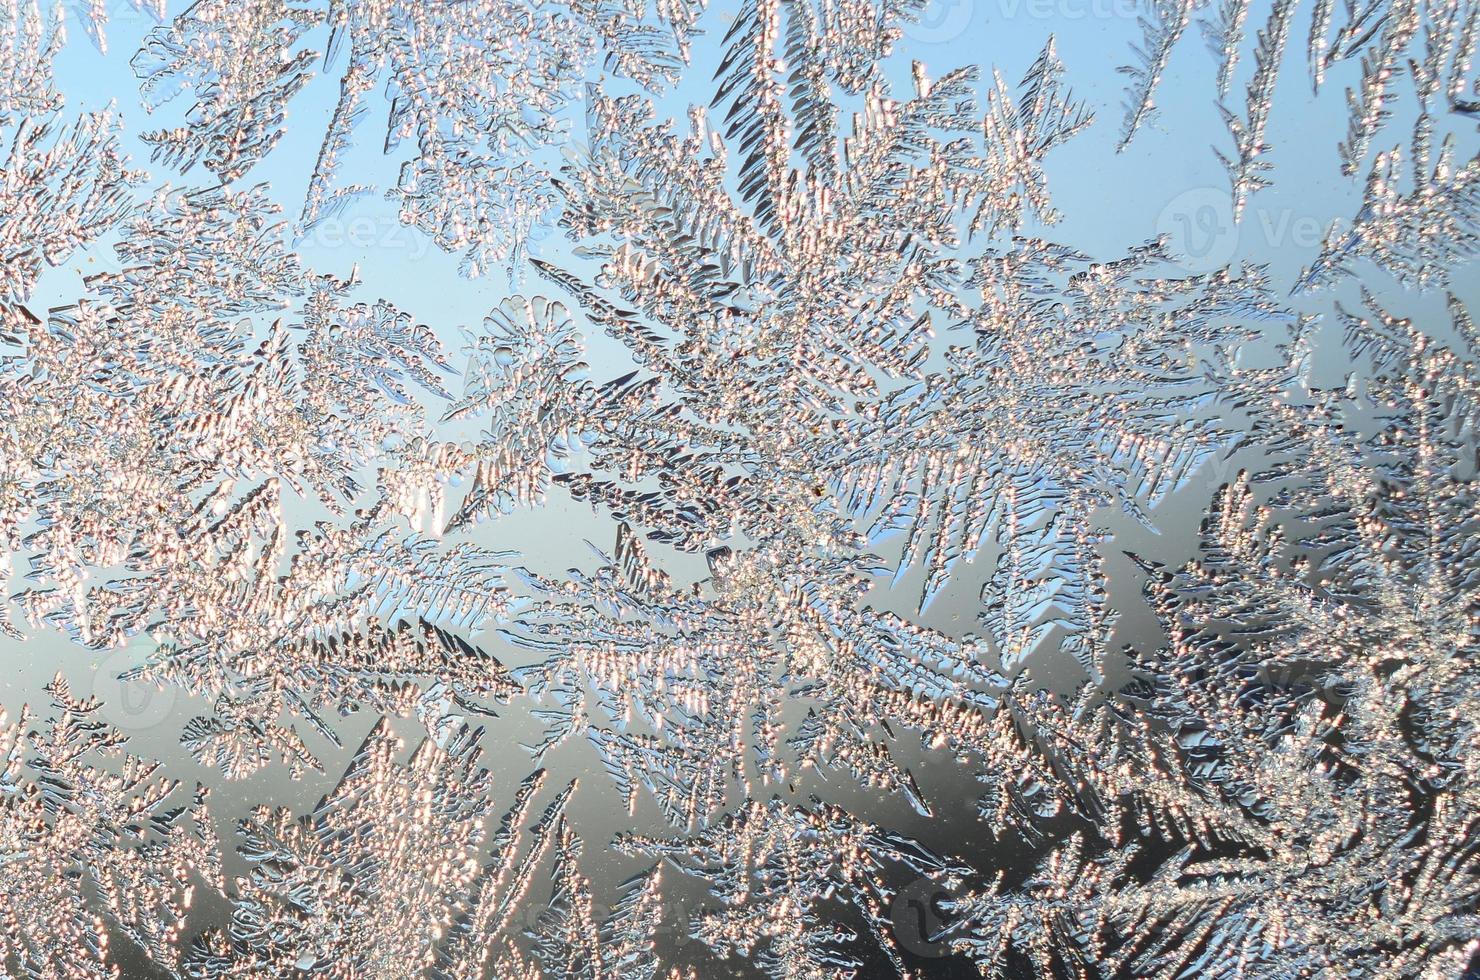 Snowflakes frost rime macro on window glass pane photo